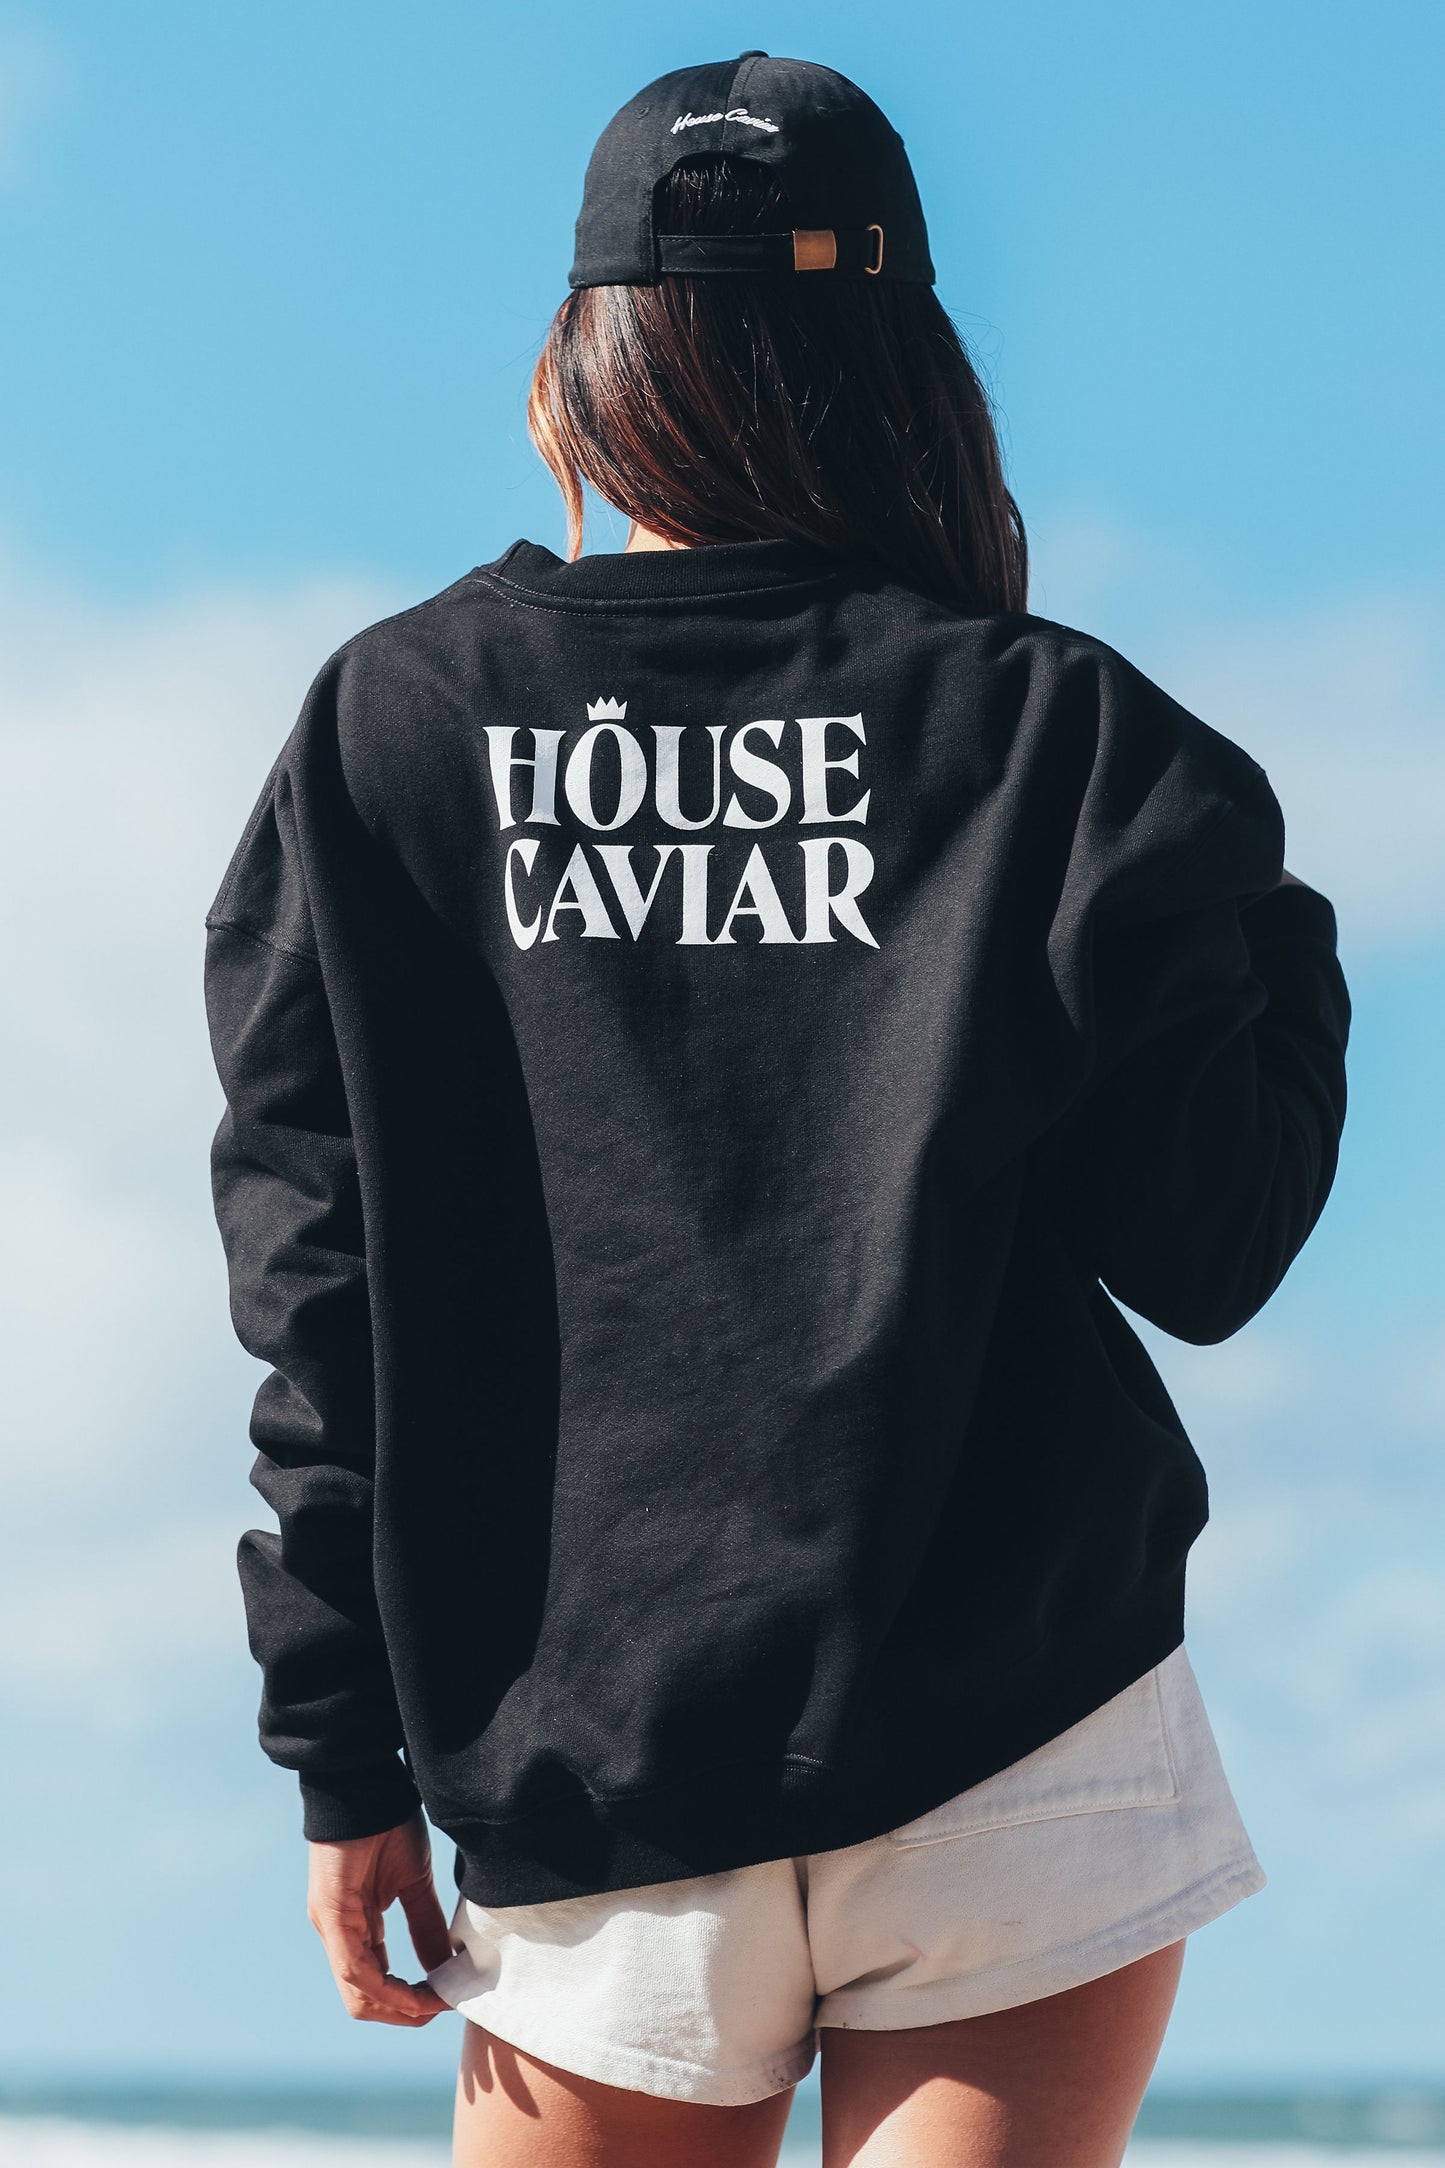 House Caviar Ultra Heavyweight Black Crewneck